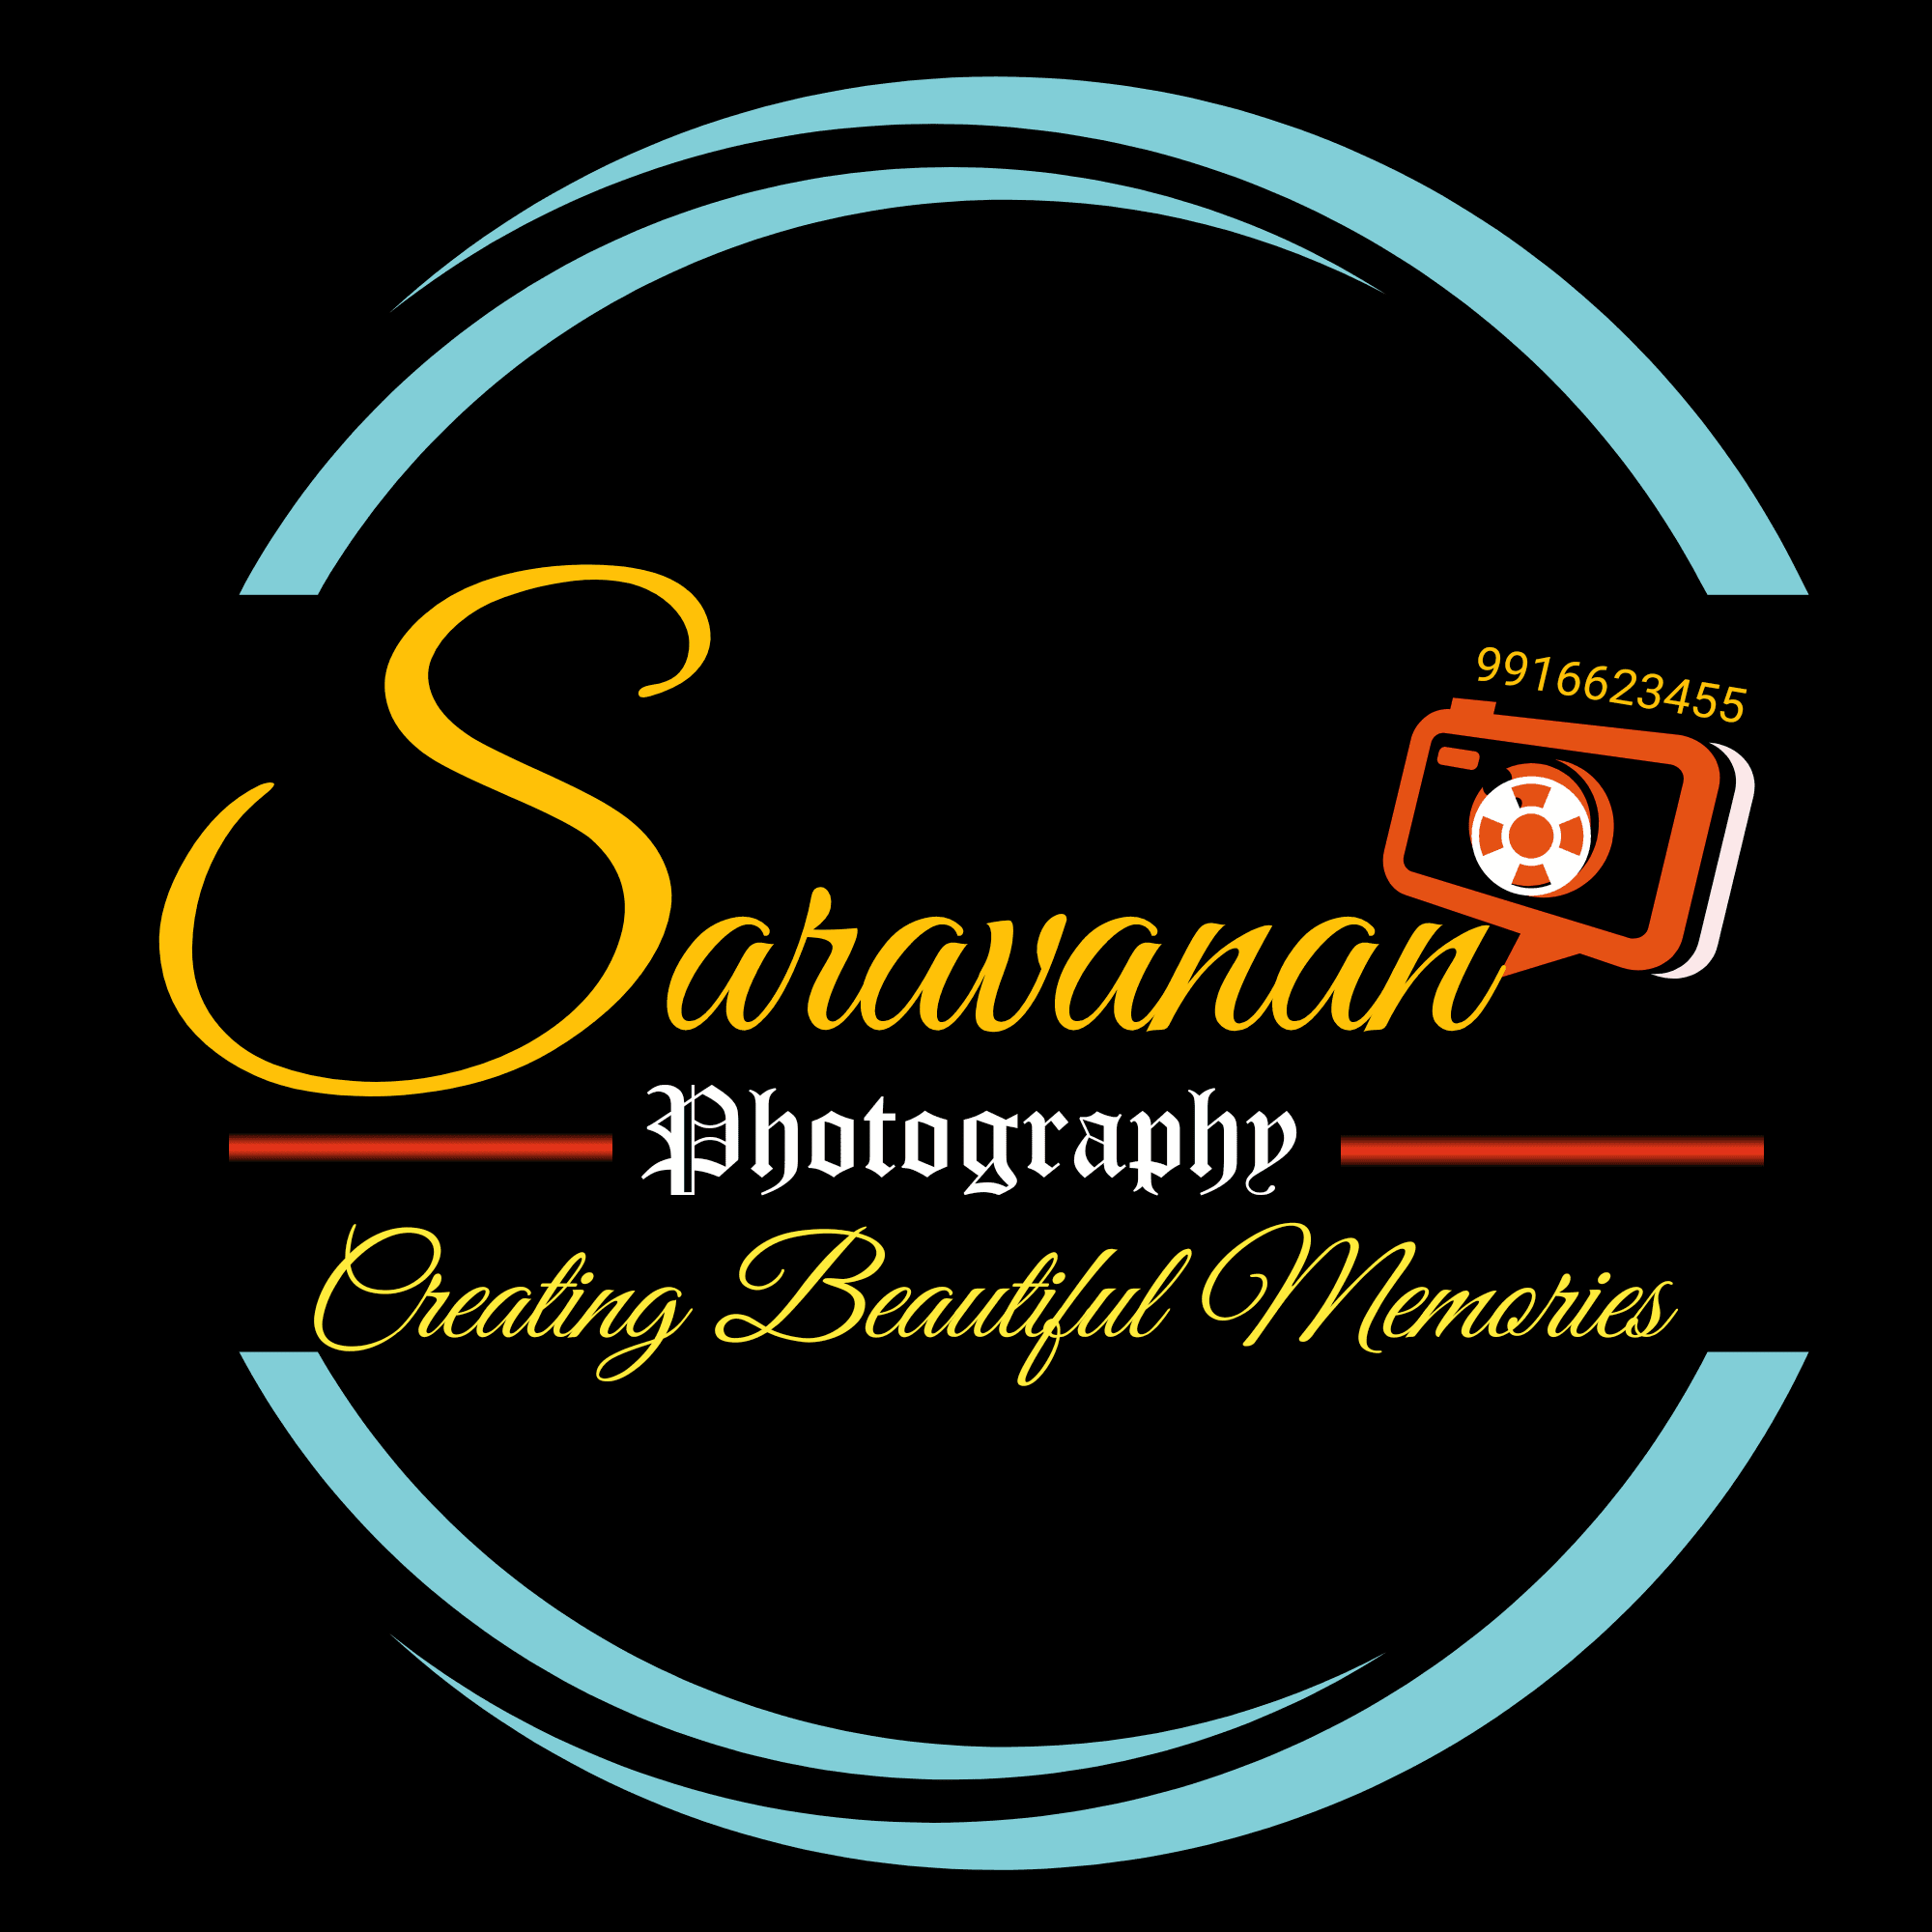 Saravanan Photography